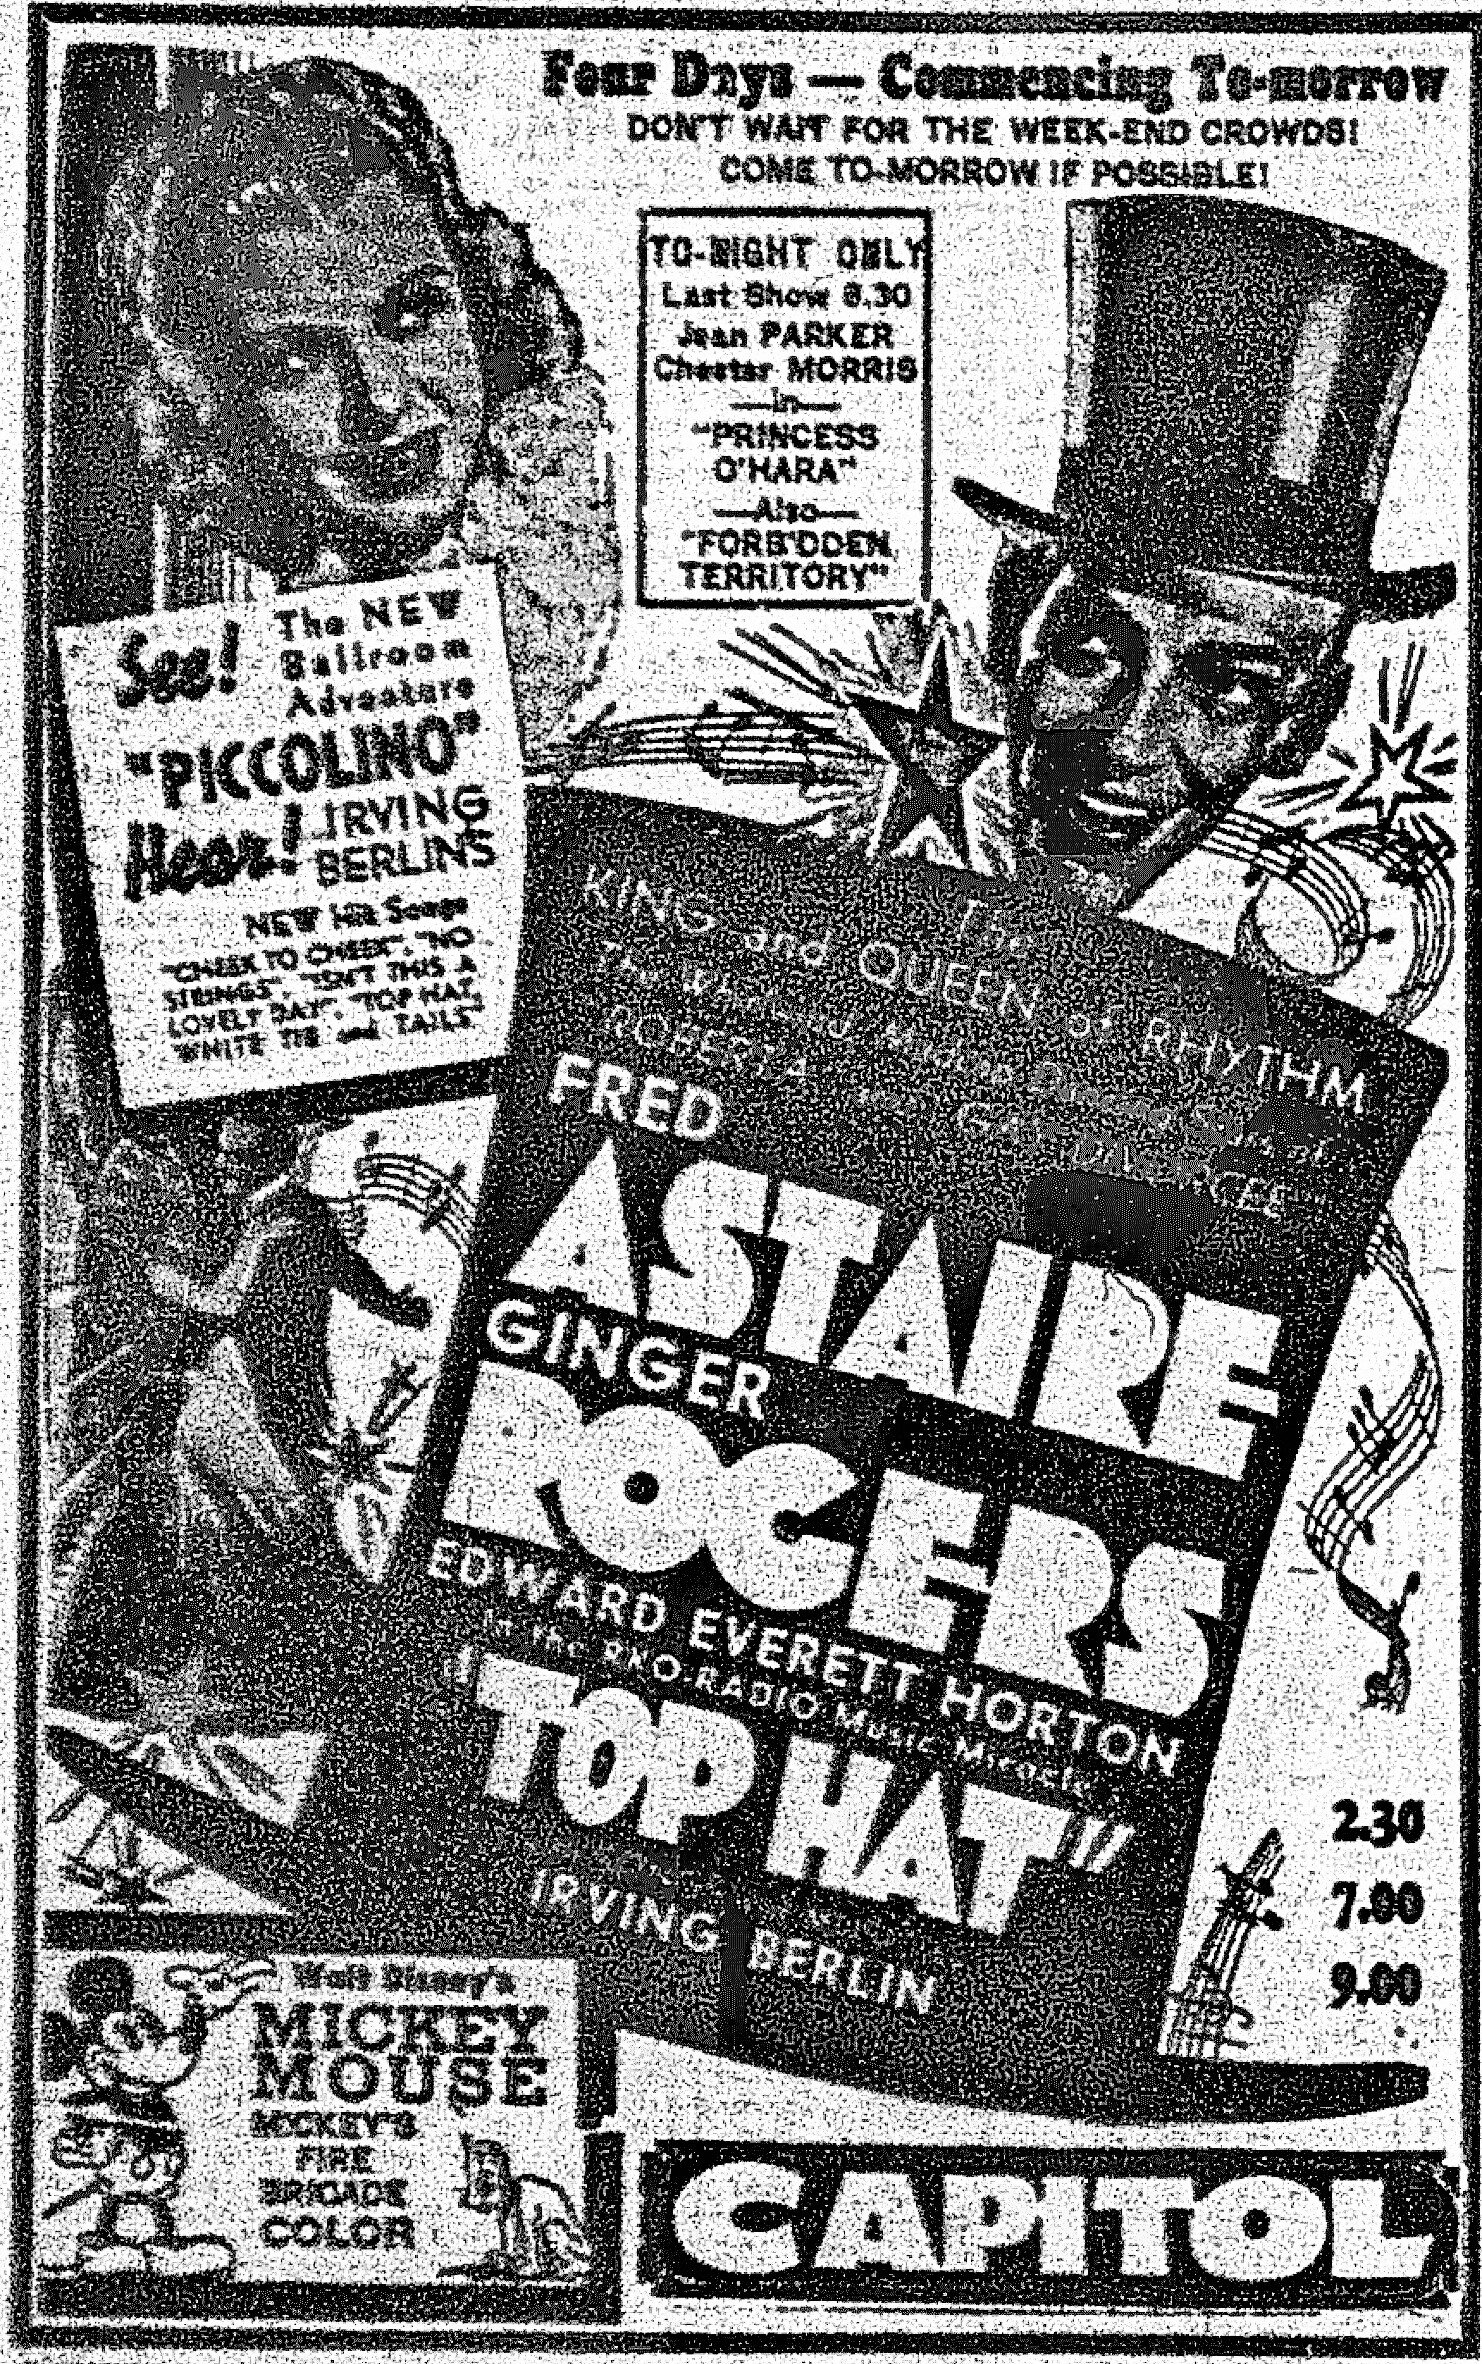 1935 Oct 8 p9 Capitol Top Hat (3).JPG